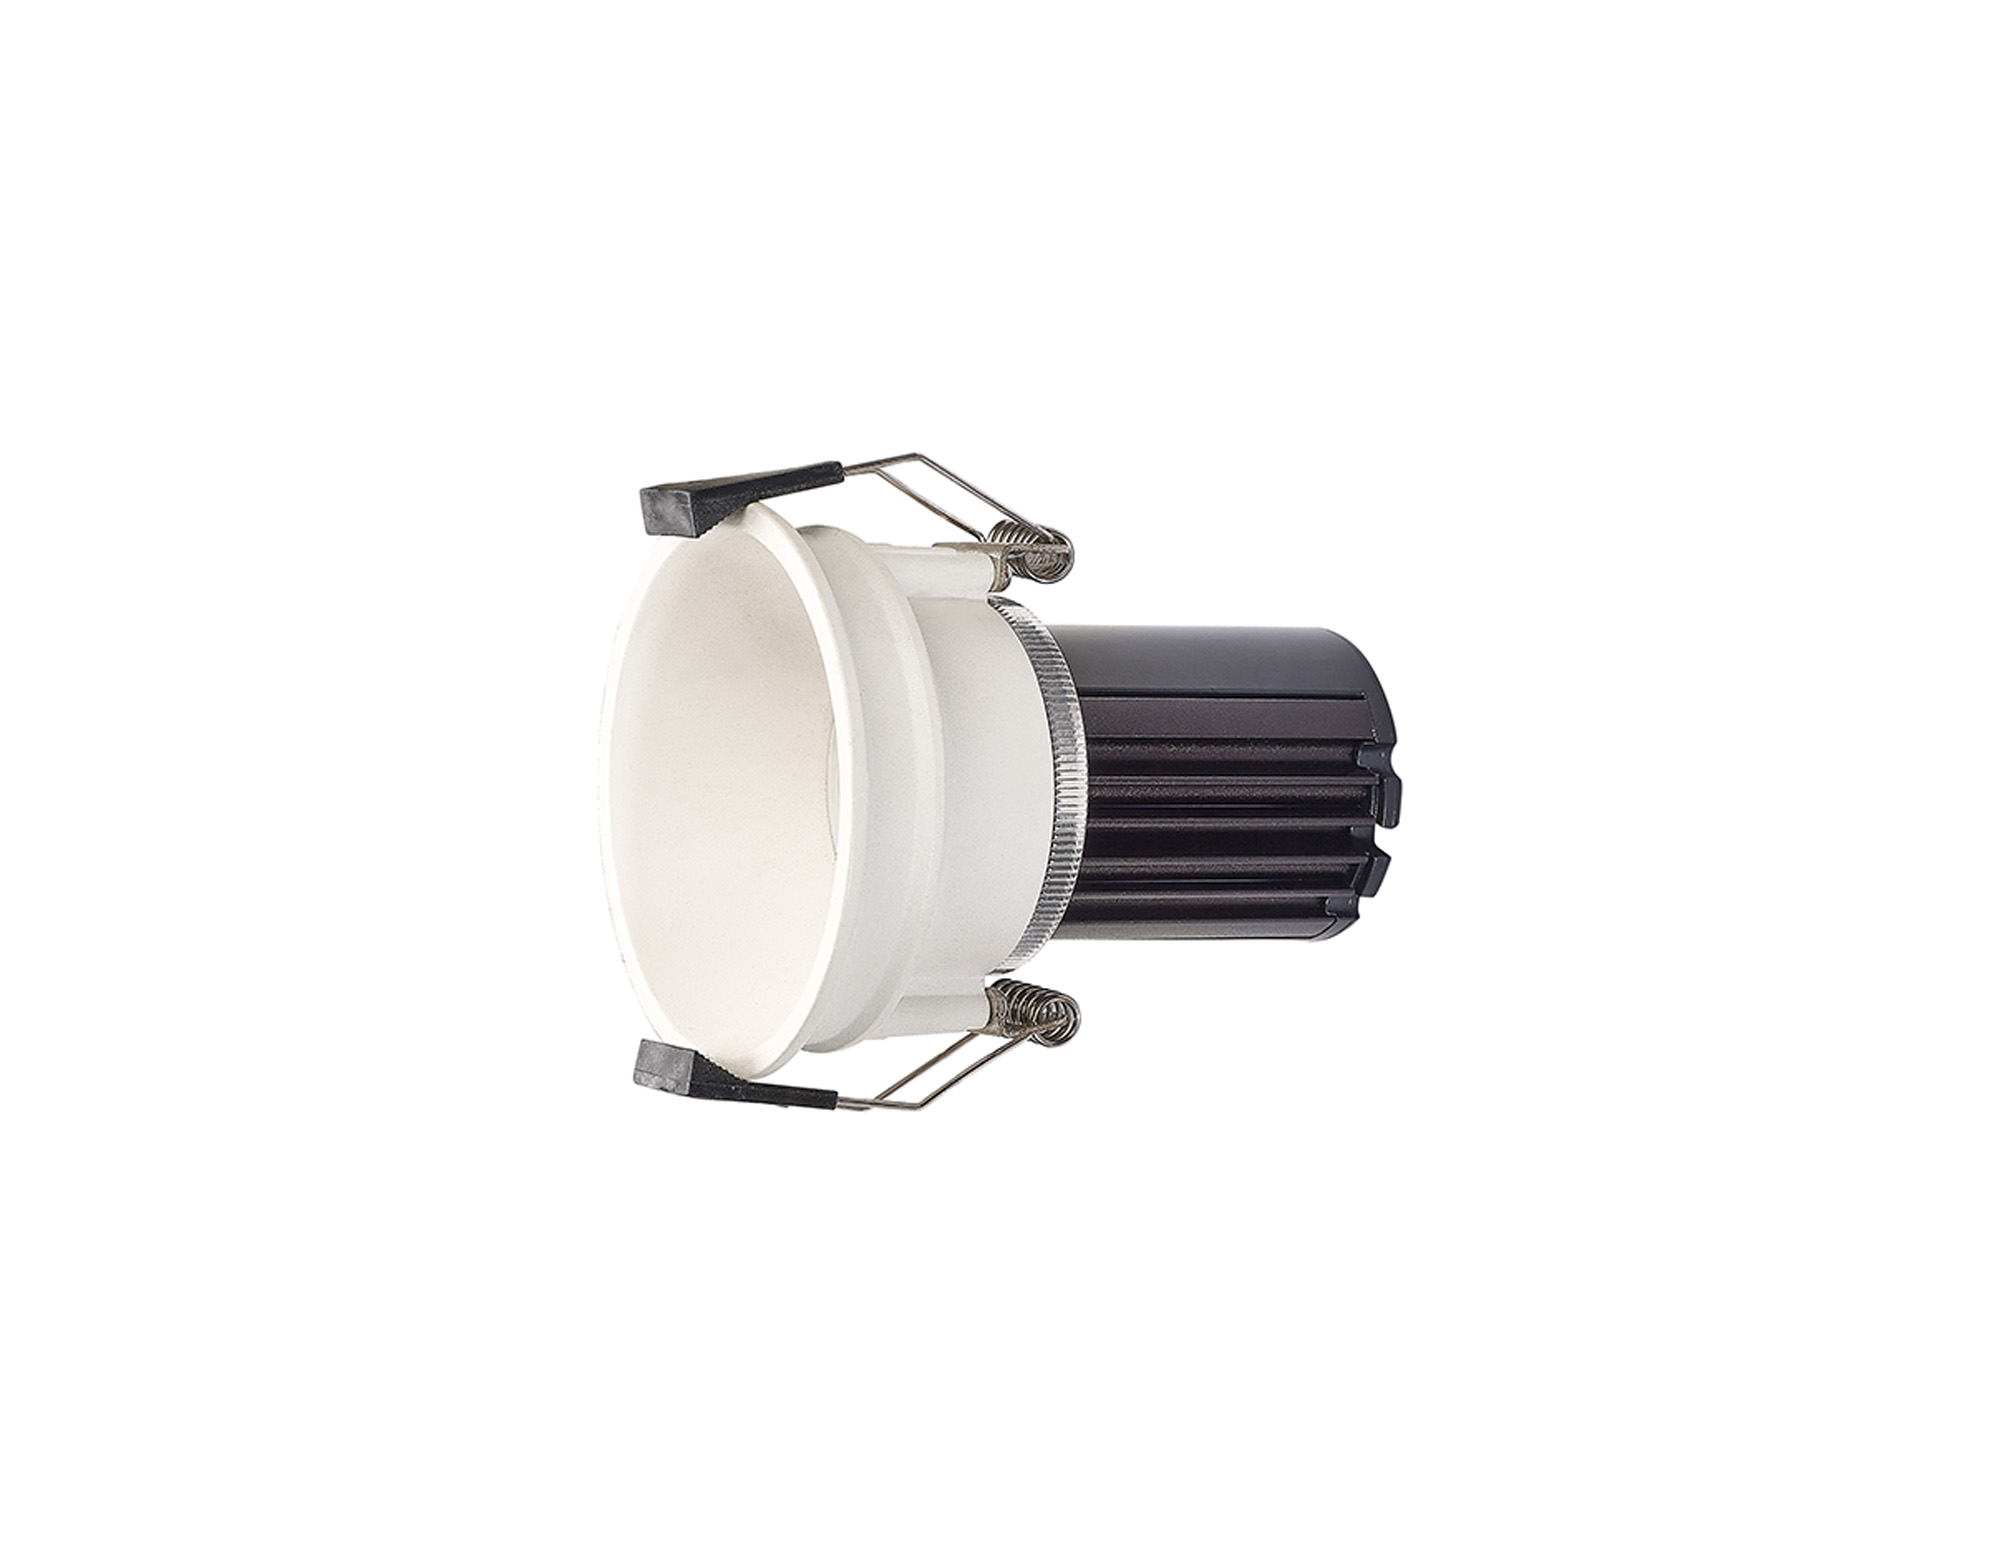 DM201618  Bania 8S 8W ,180mA 480lm 3000K 60° LED Engine, White IP20 Fixed Recessed Spotlight , 5yrs Warranty